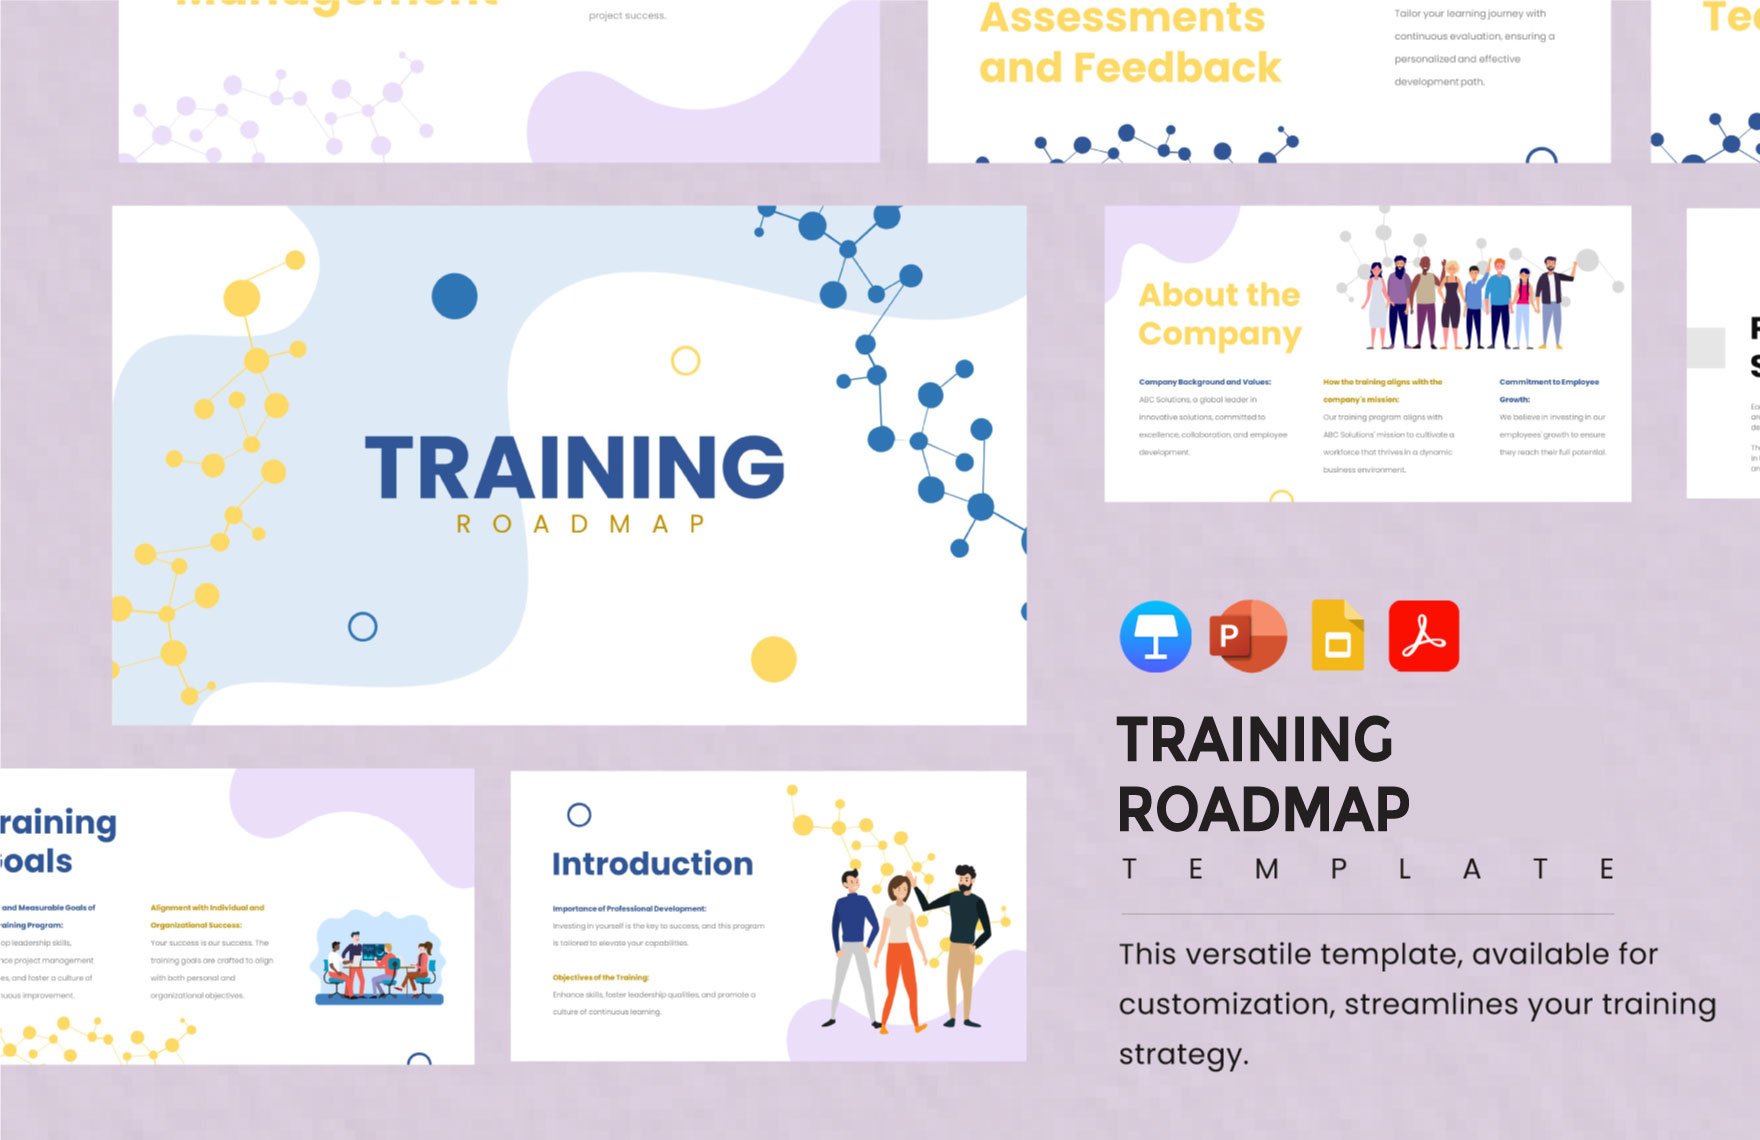 Training Roadmap Template